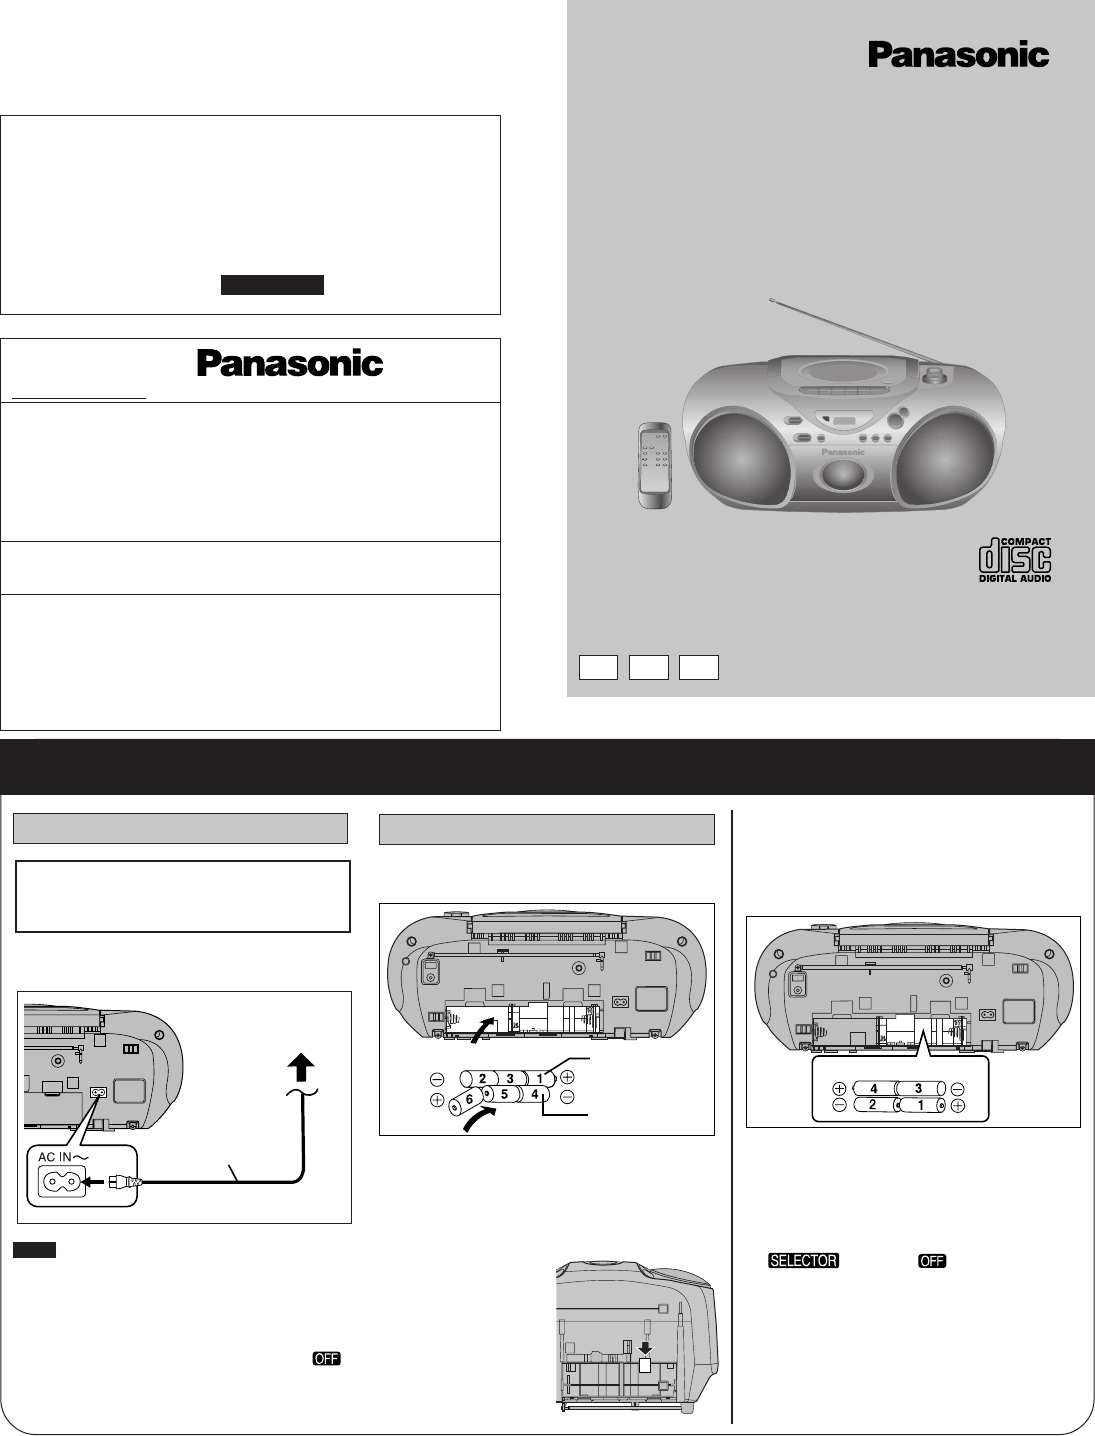 Panasonic radio cd player manual